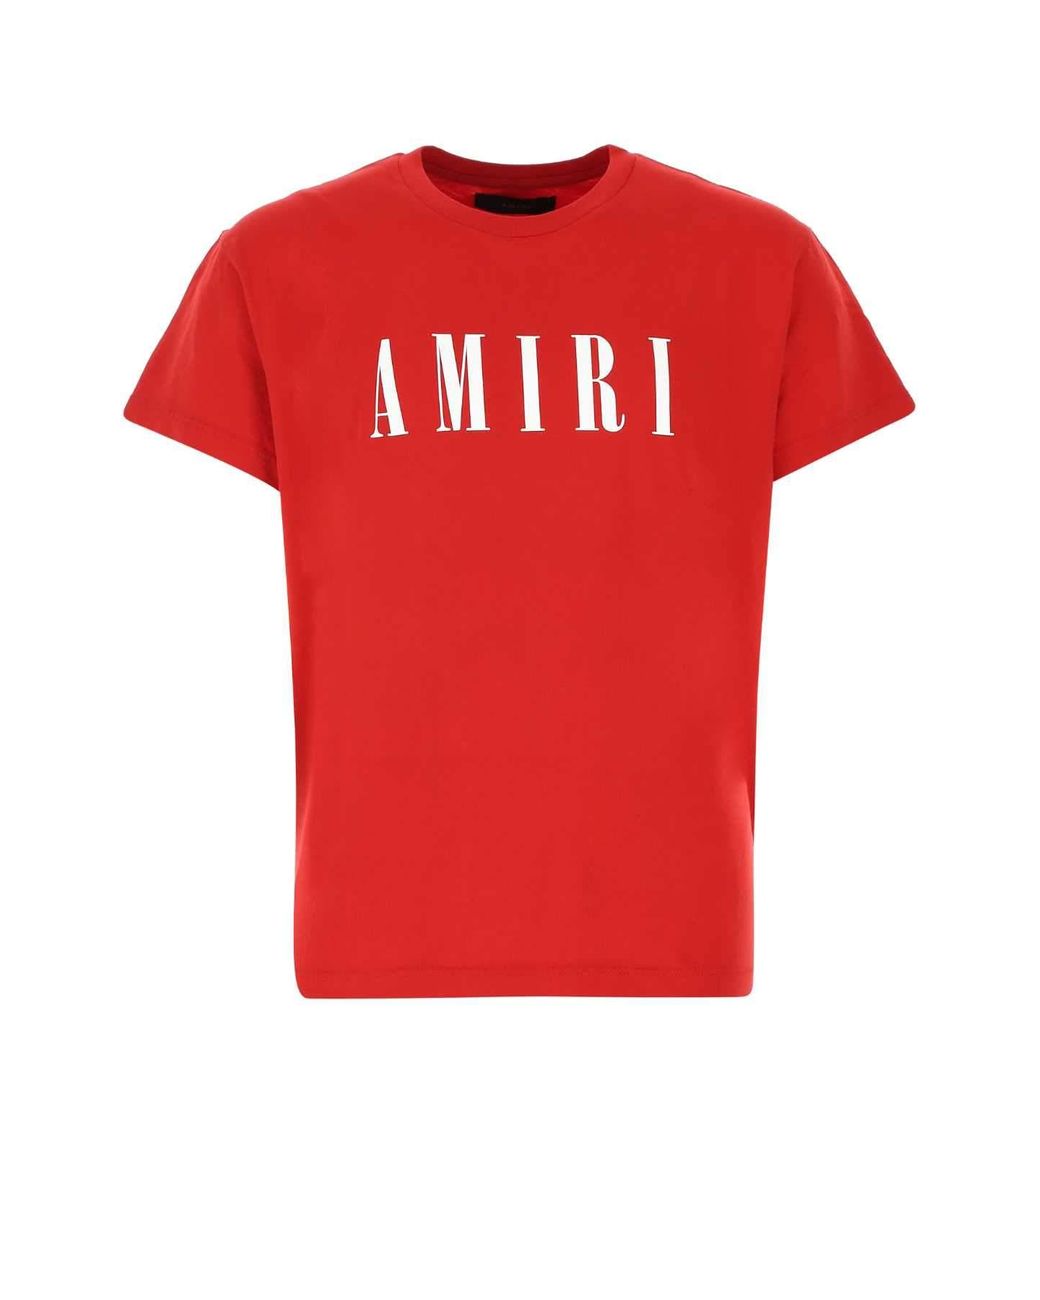 Amiri t-shirts for Men